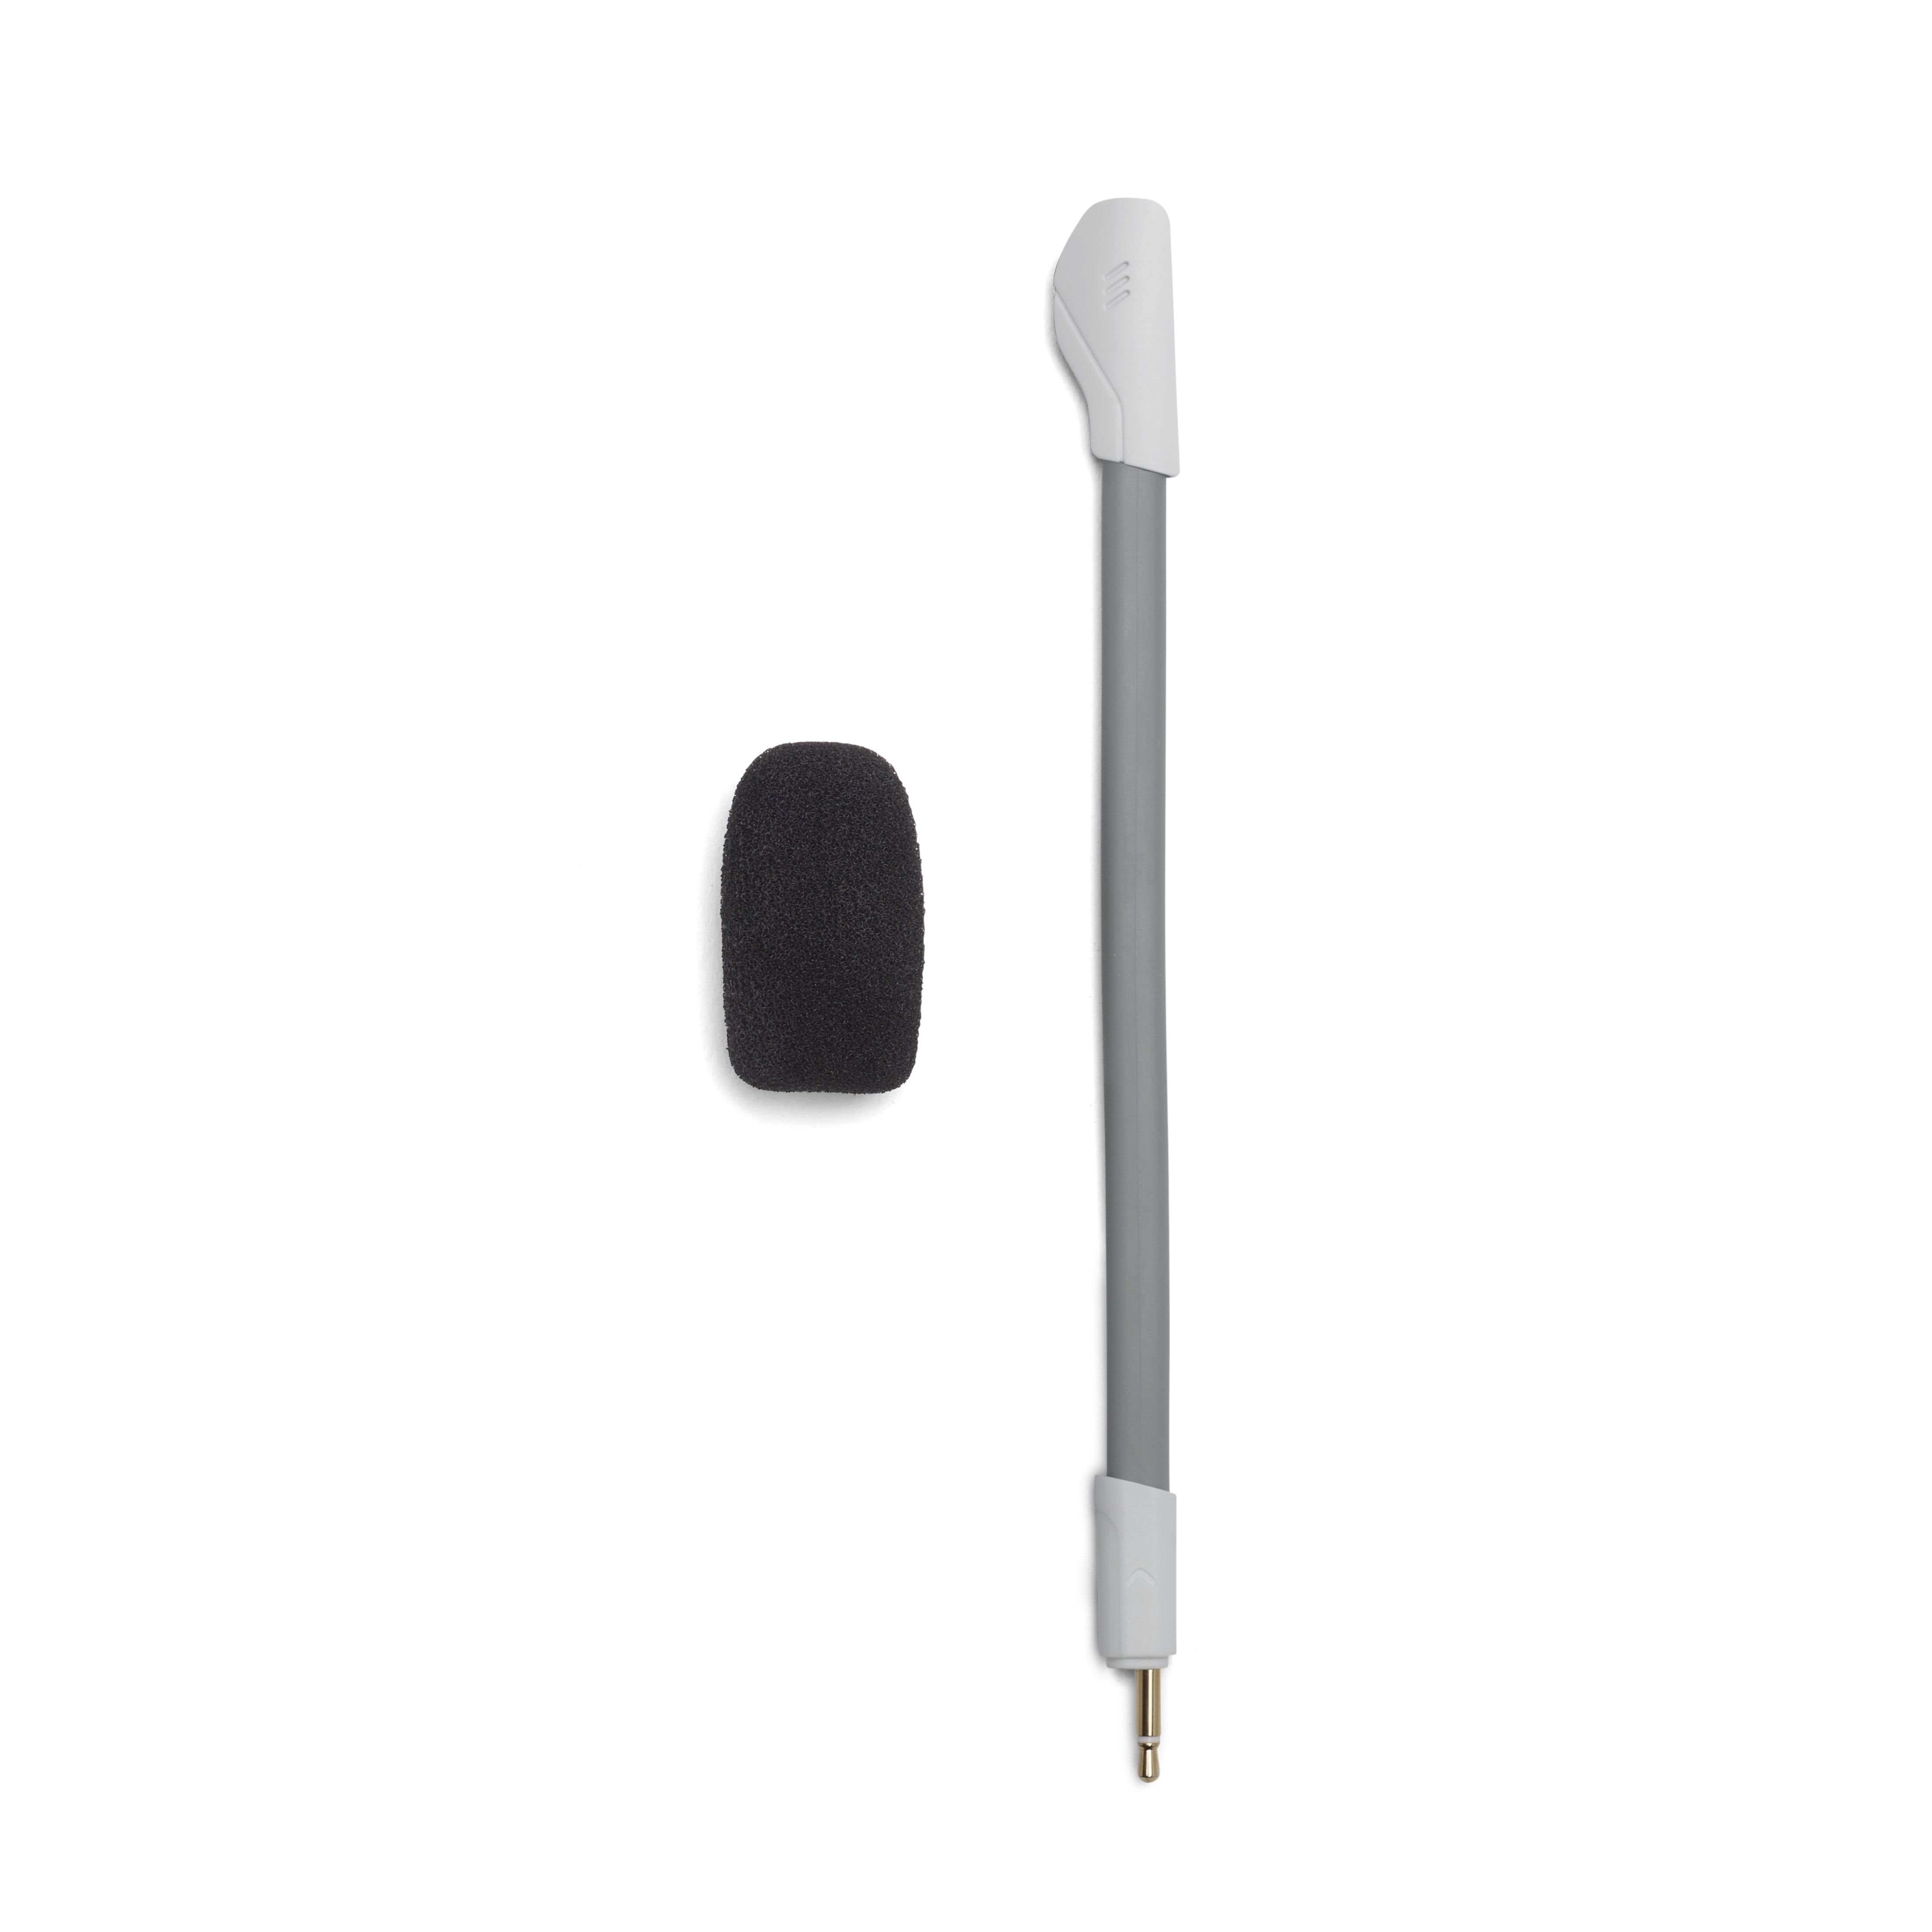  JBL Quantum 100 - Wired Over-Ear Gaming Headphones - White  (Renewed)